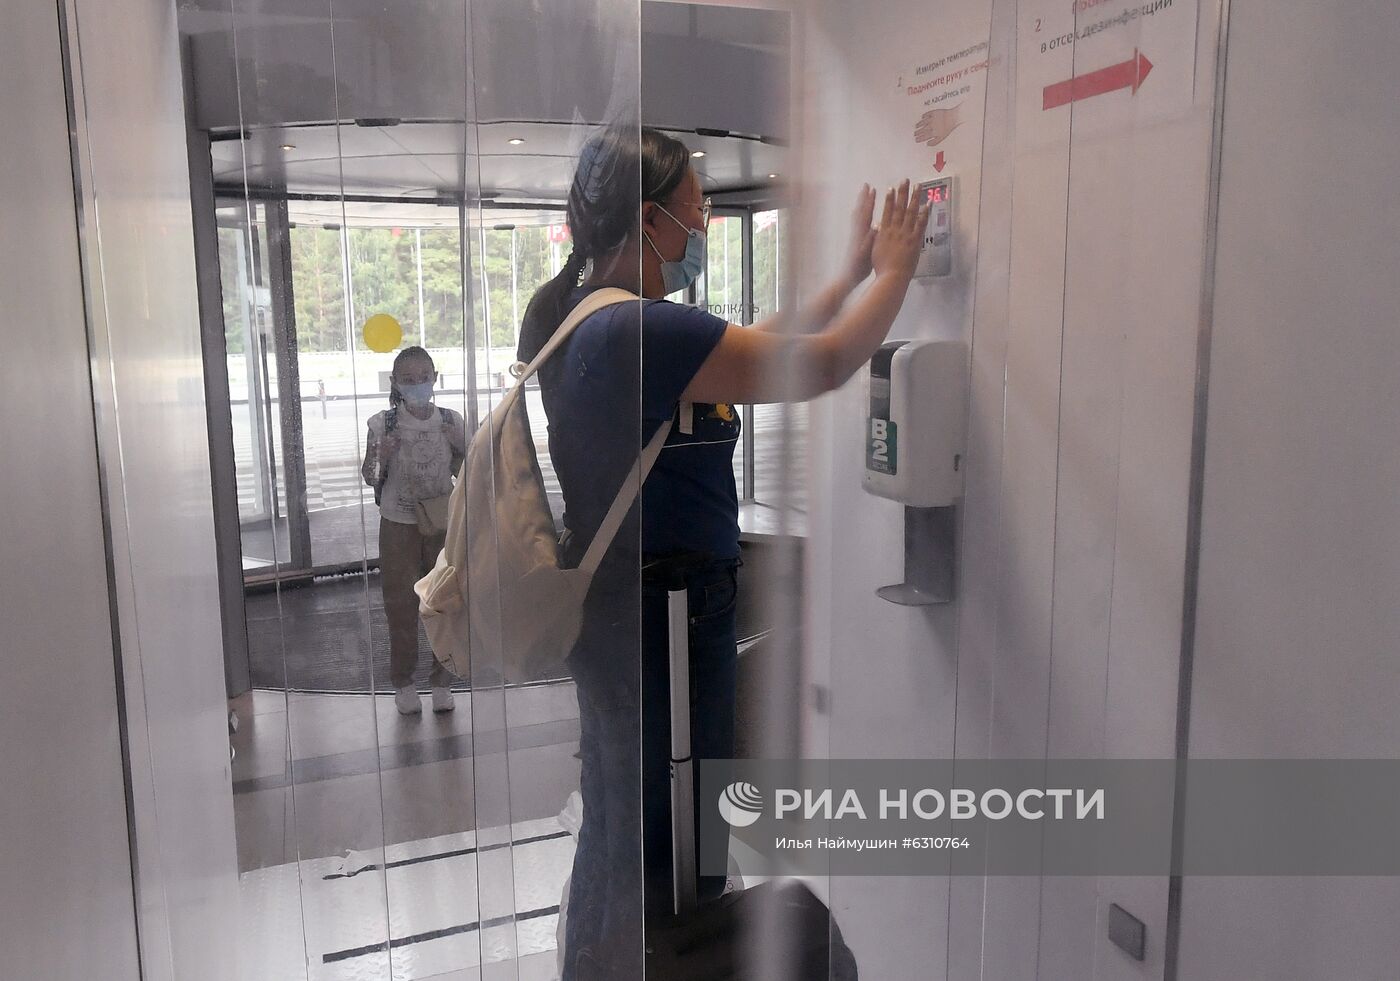 Дезинфицирующий коридор установили в аэропорту Красноярска